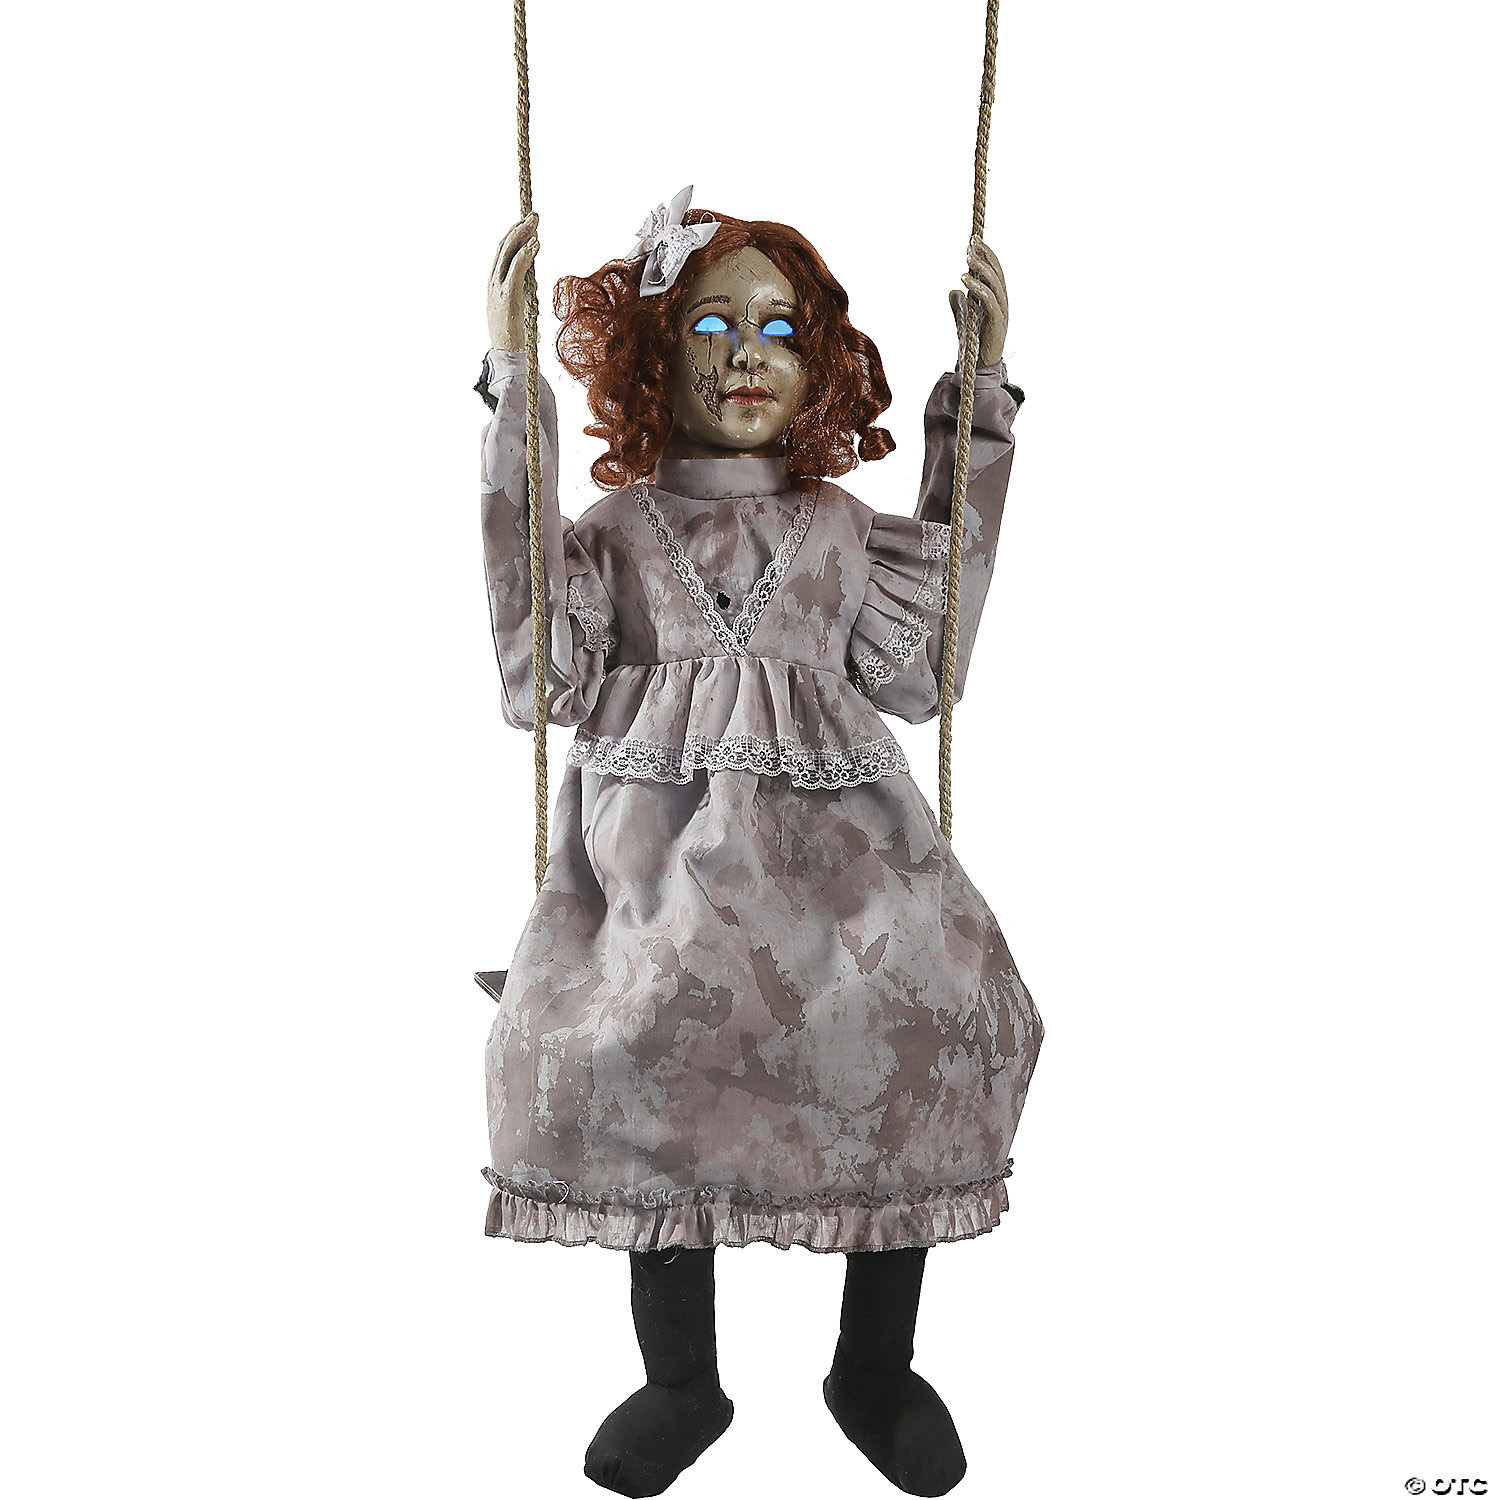 Swinging Decrepit Doll Animated Prop